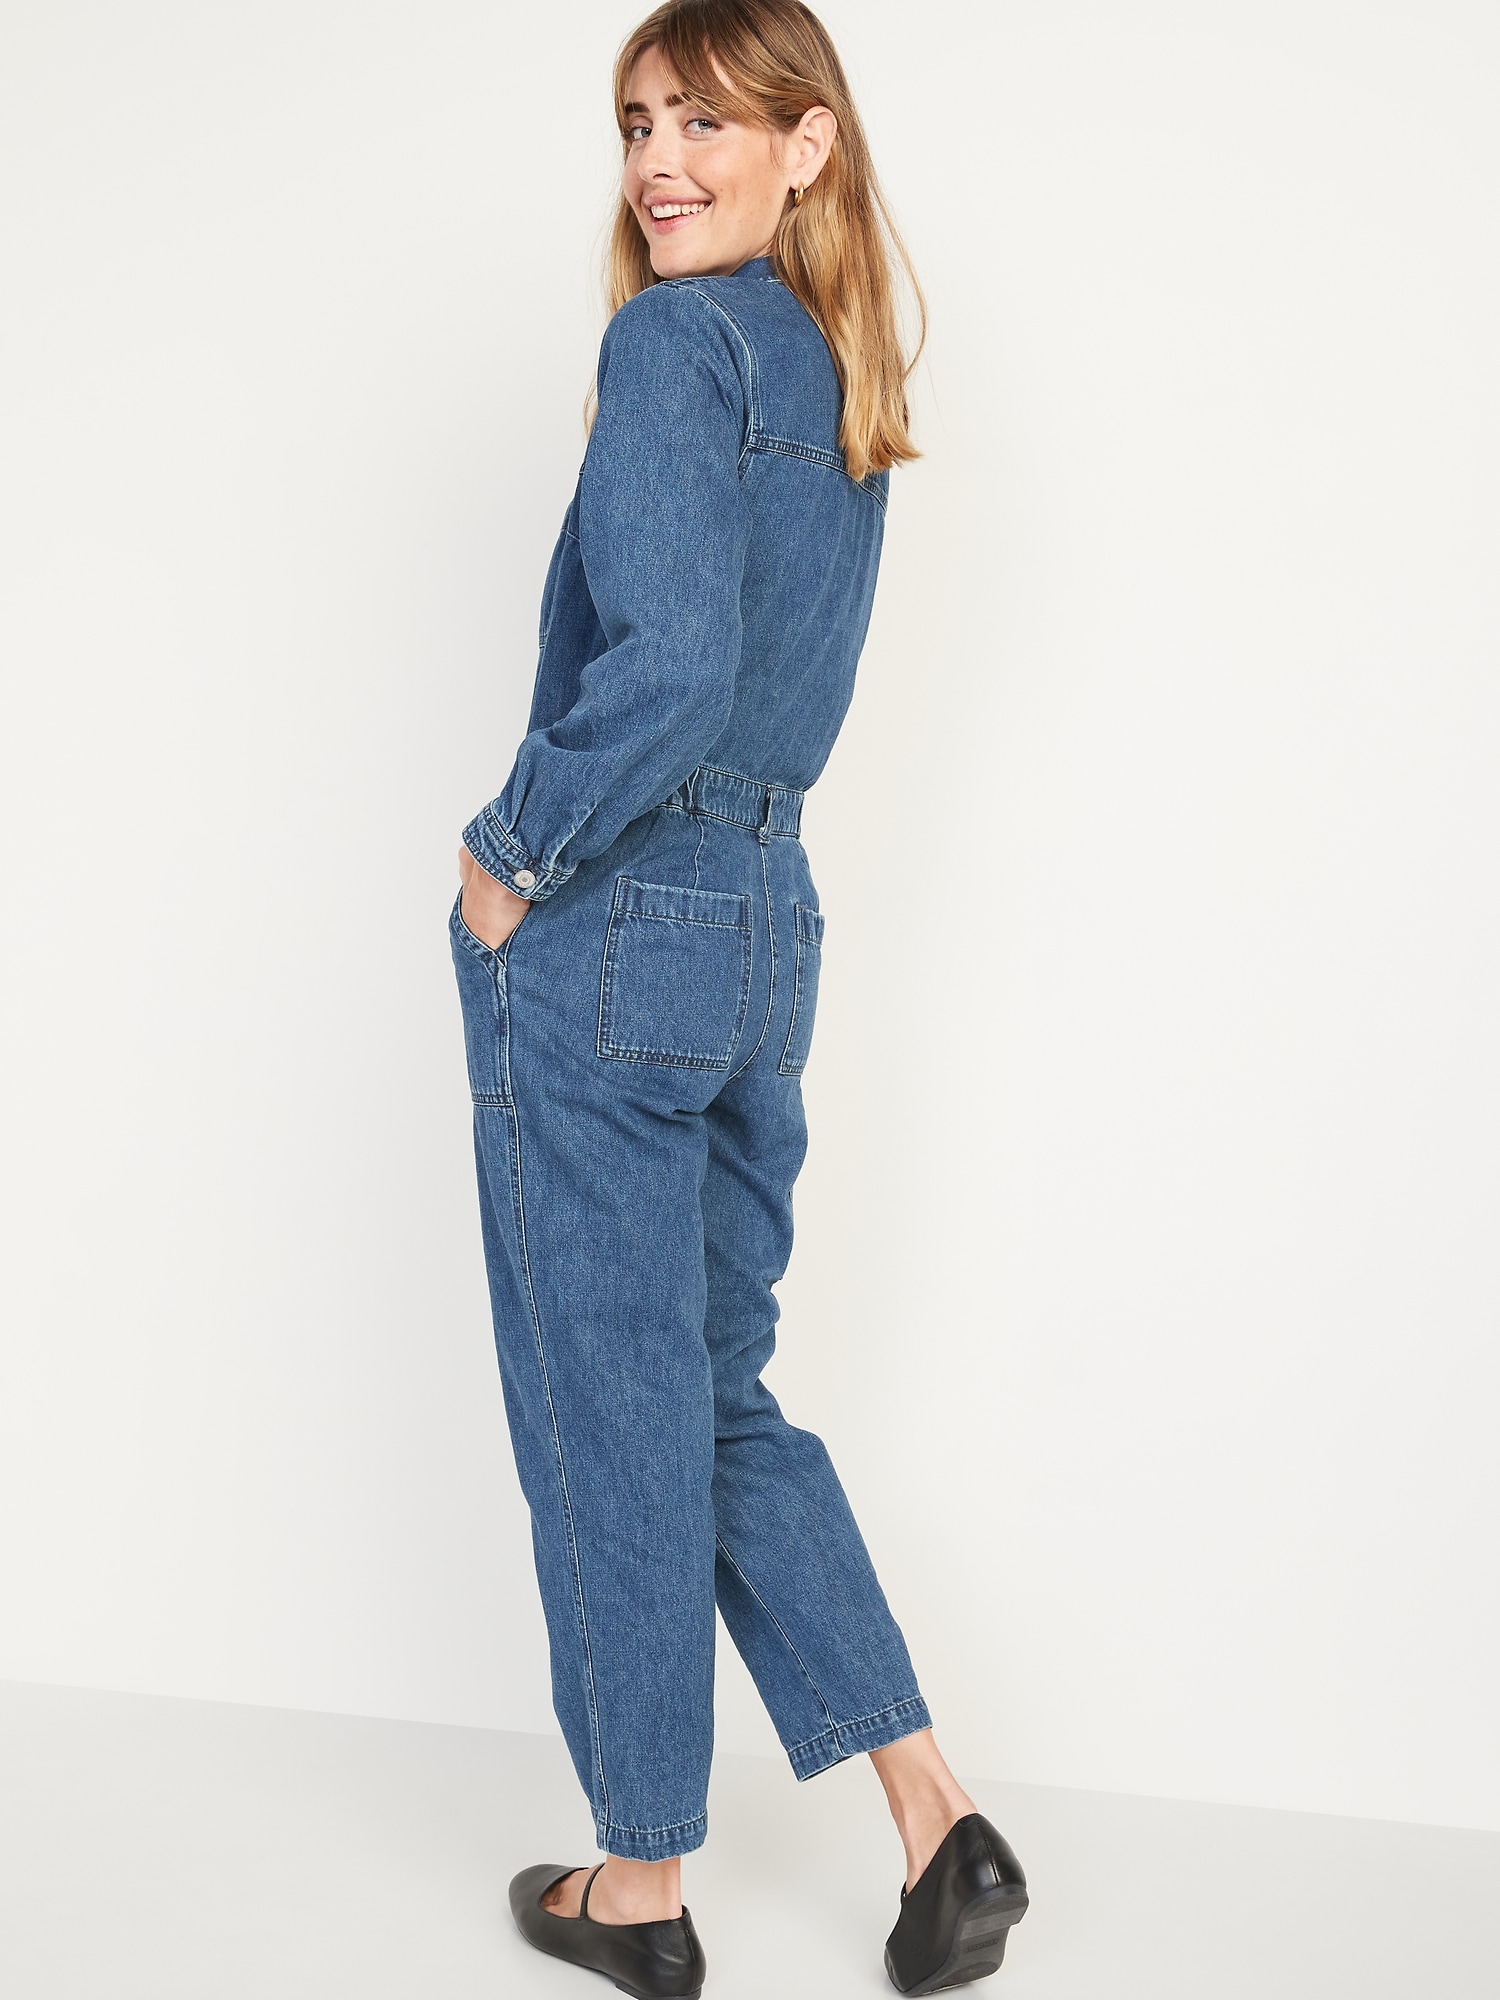 Long-Sleeve Medium-Wash Utility Jean Jumpsuit for Women